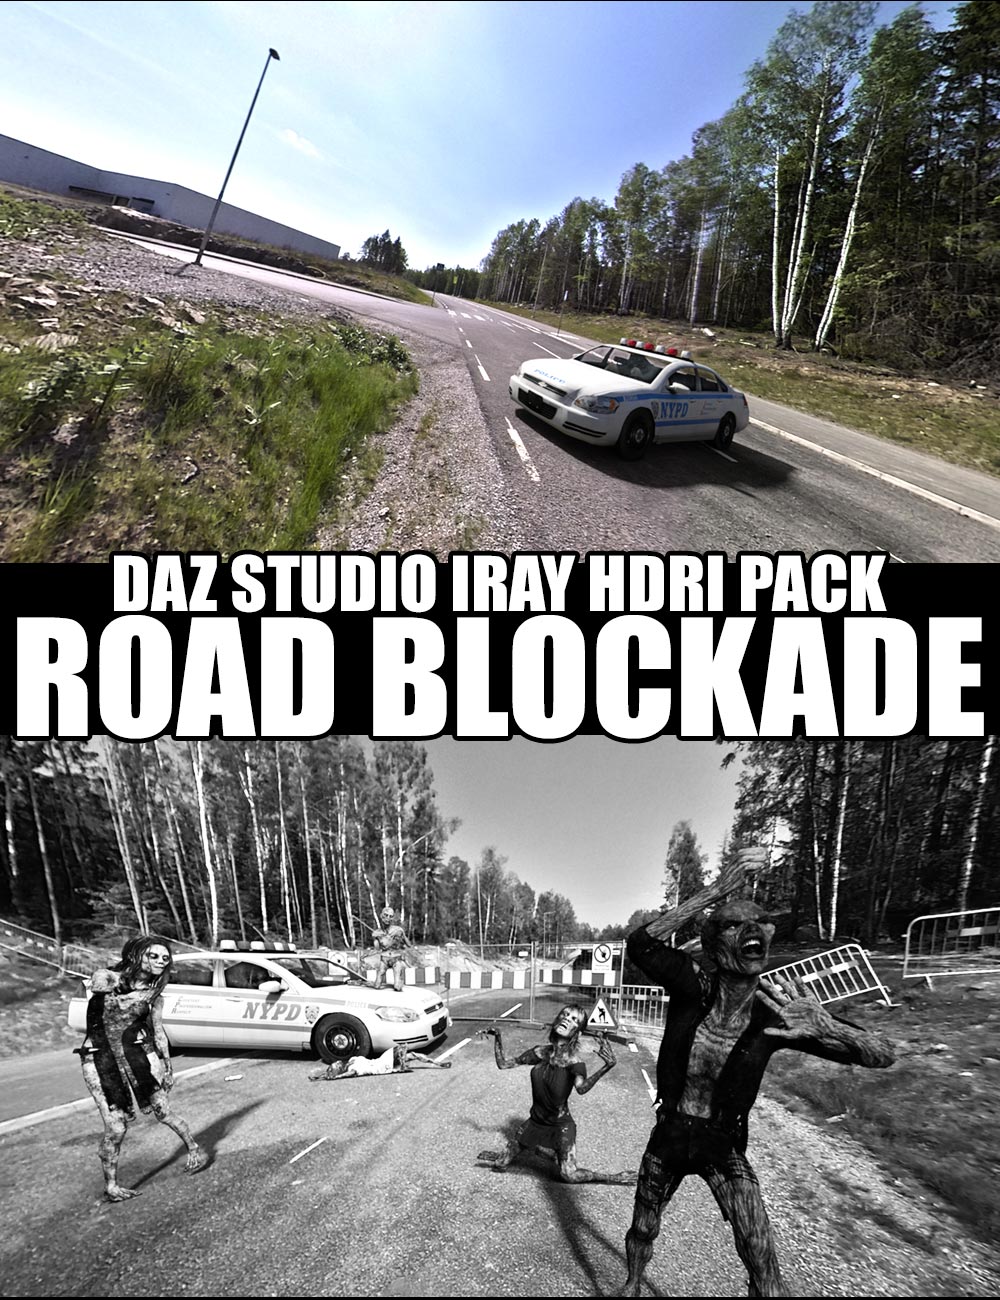 Road Blockade - Daz Studio Iray HDRI Pack by: Dreamlight, 3D Models by Daz 3D